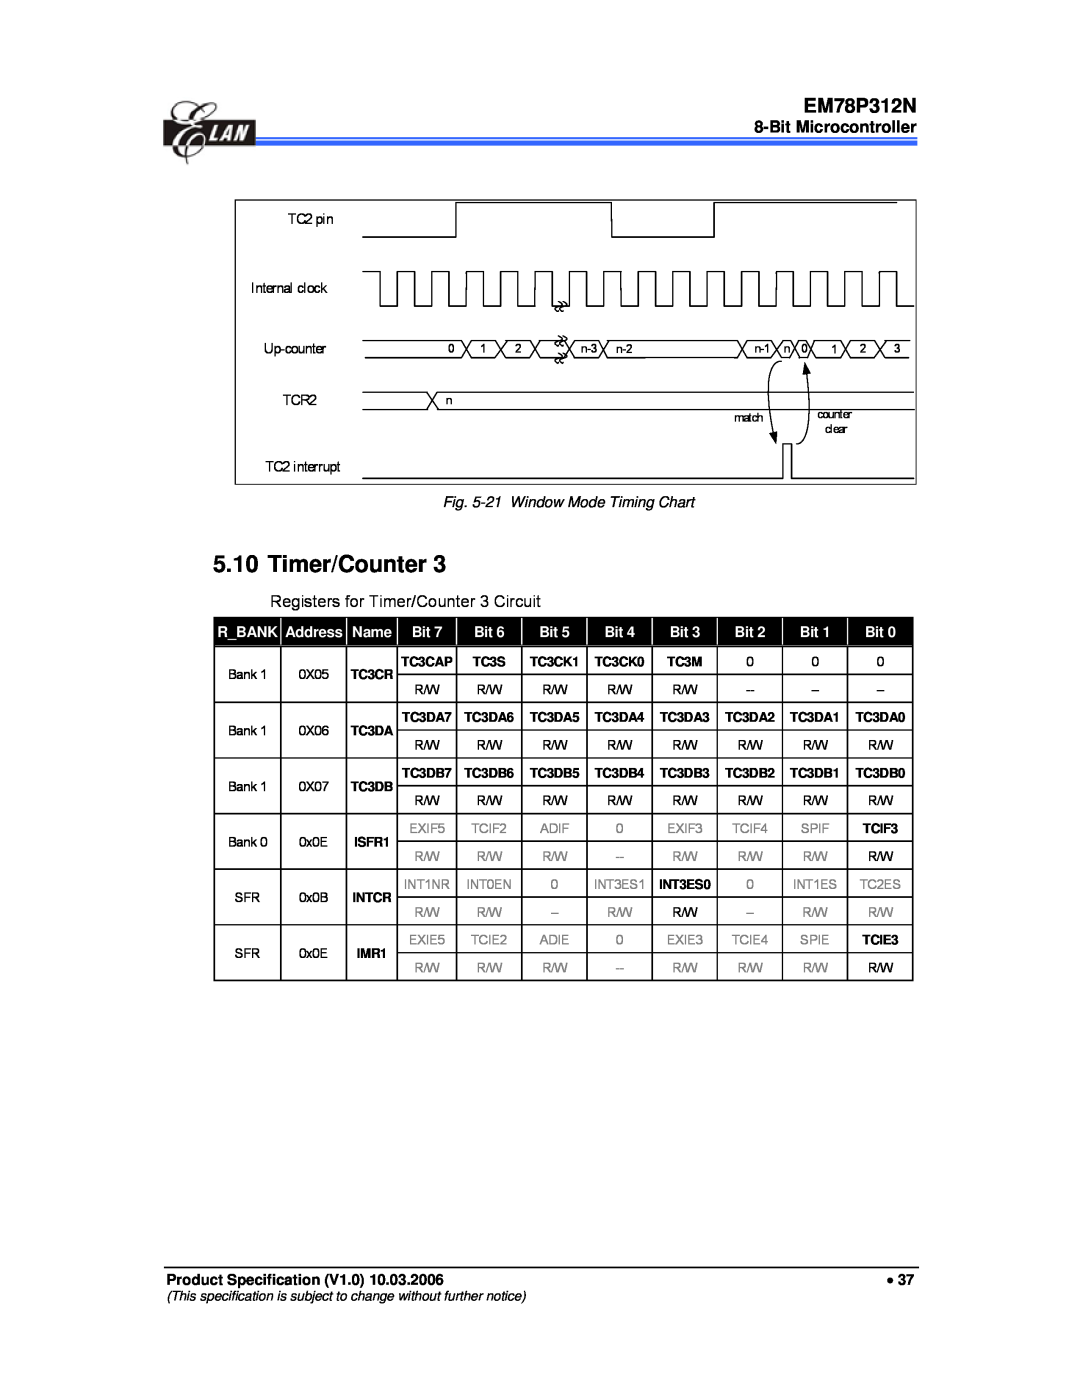 IBM EM78P312N manual Bit Microcontroller, Registers for Timer/Counter 3 Circuit, 21 Window Mode Timing Chart 